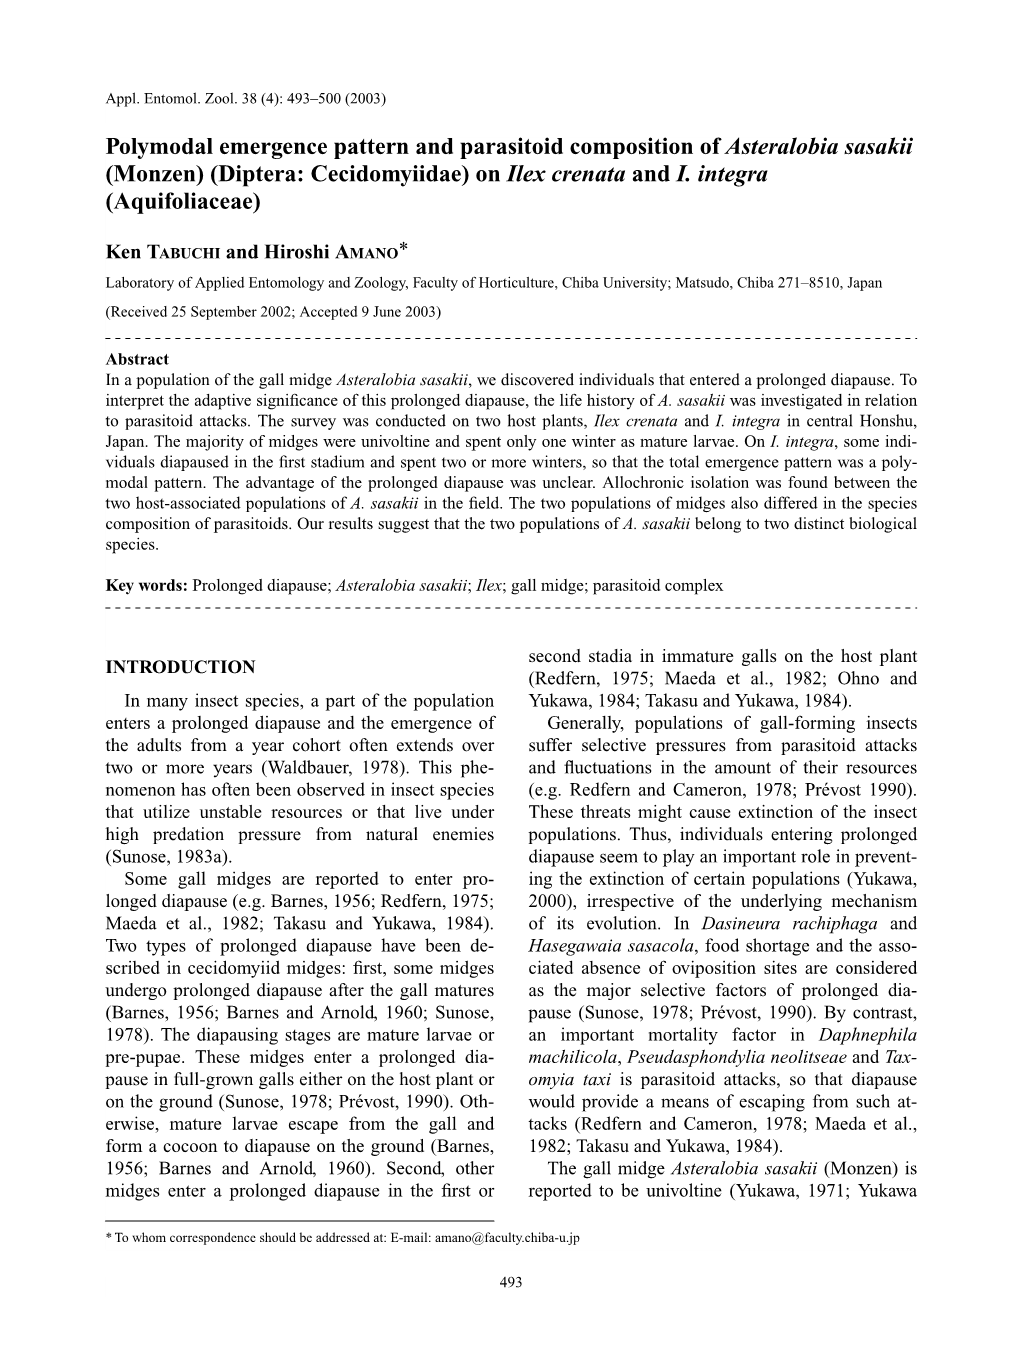 Polymodal Emergence Pattern and Parasitoid Composition of Asteralobia Sasakii (Monzen) (Diptera: Cecidomyiidae) on Ilex Crenata and I